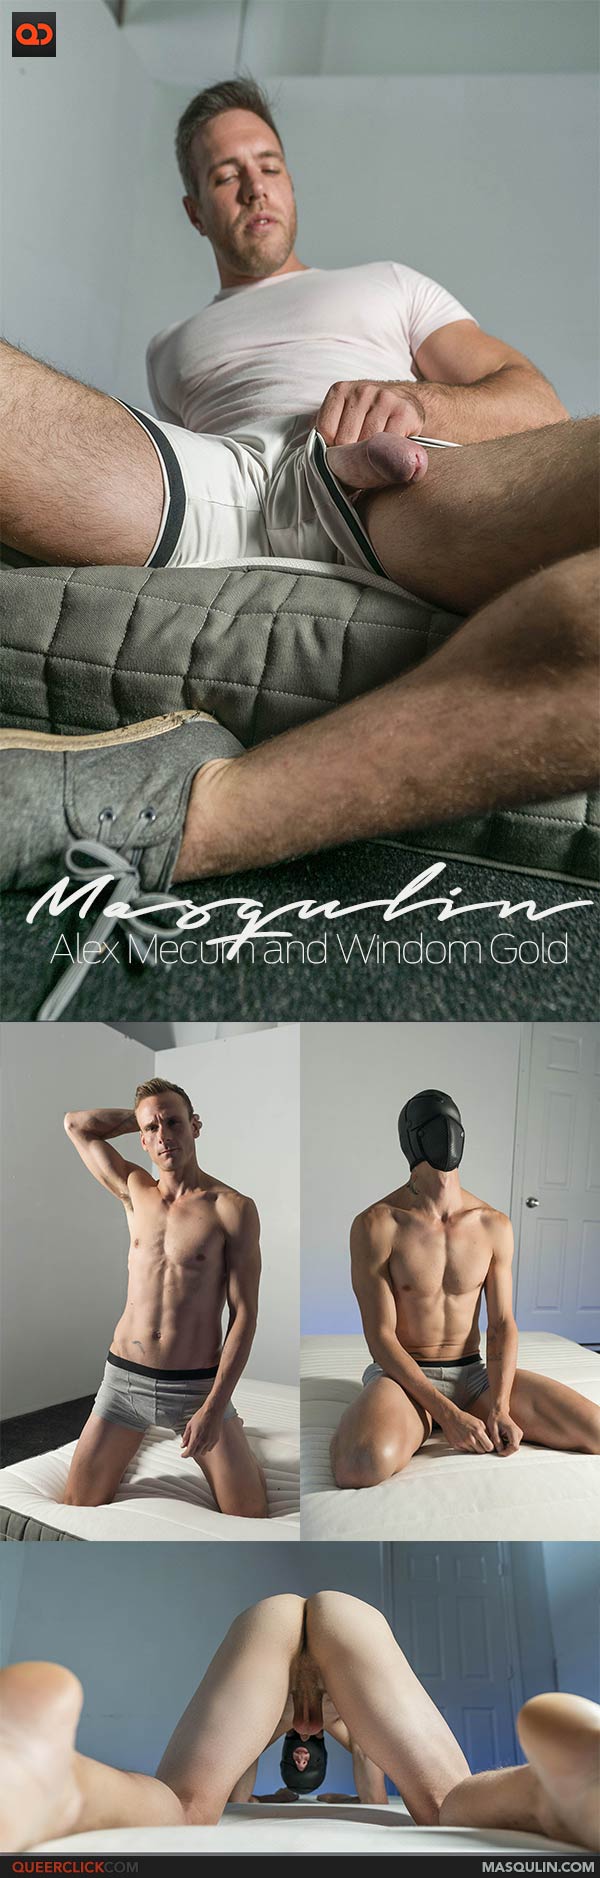 Masqulin: Alex Mecum and Windom Gold